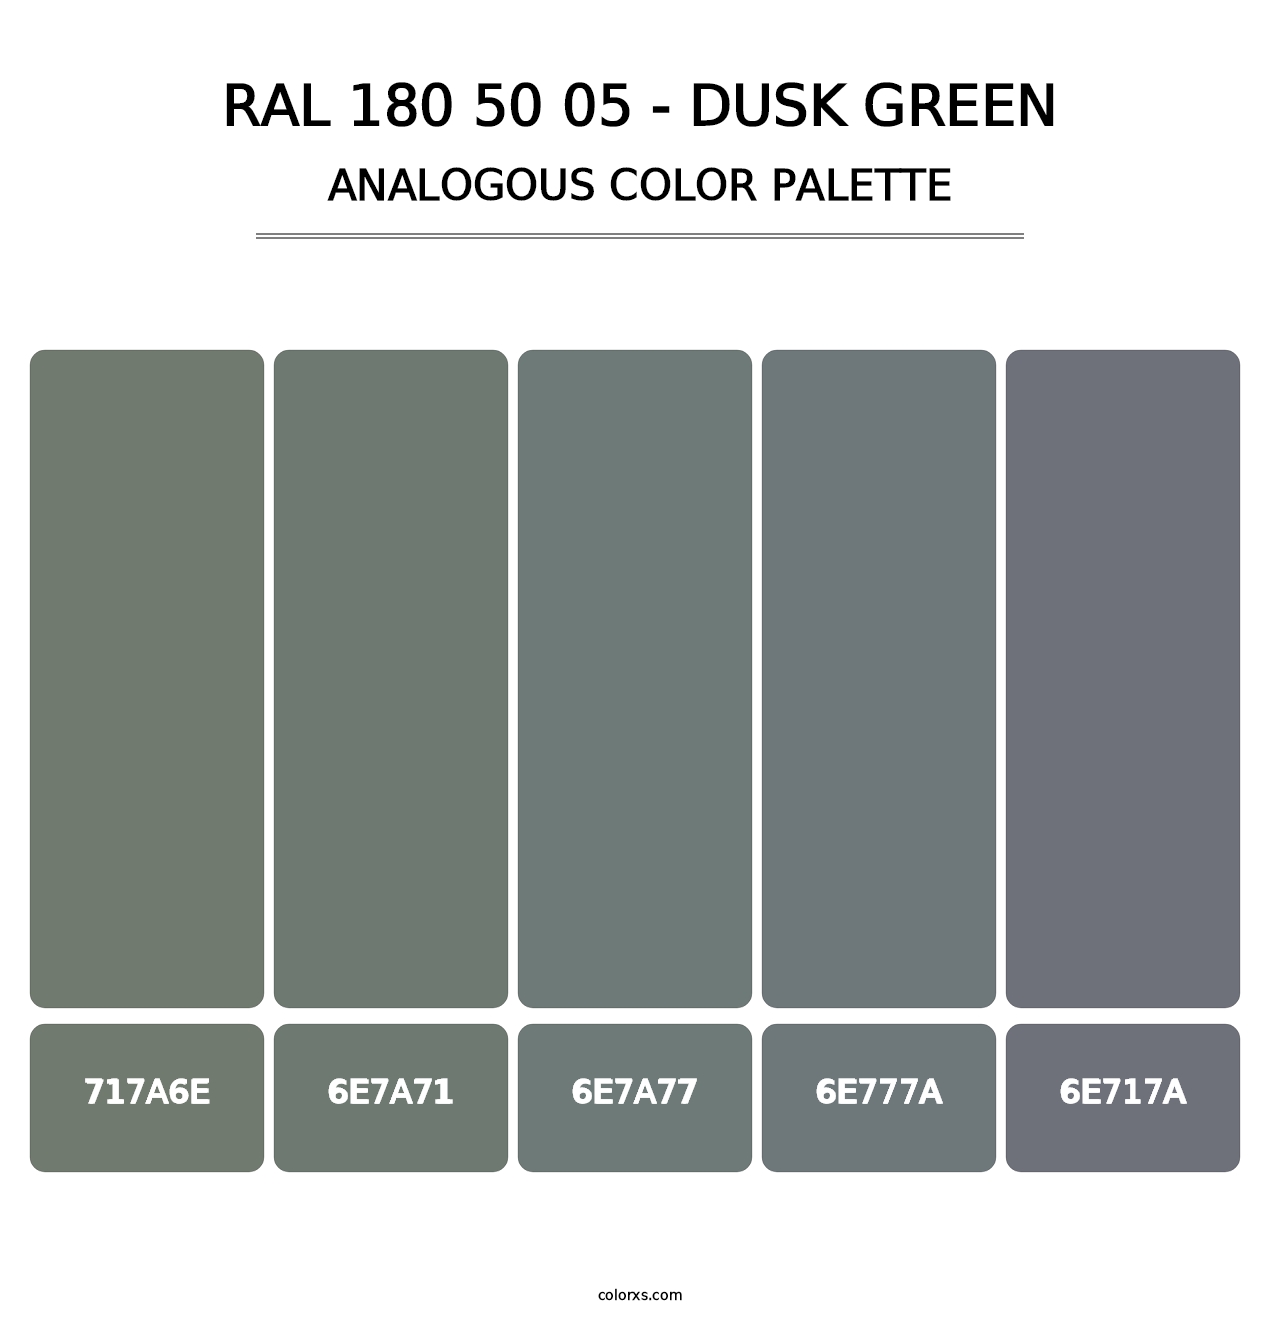 RAL 180 50 05 - Dusk Green - Analogous Color Palette